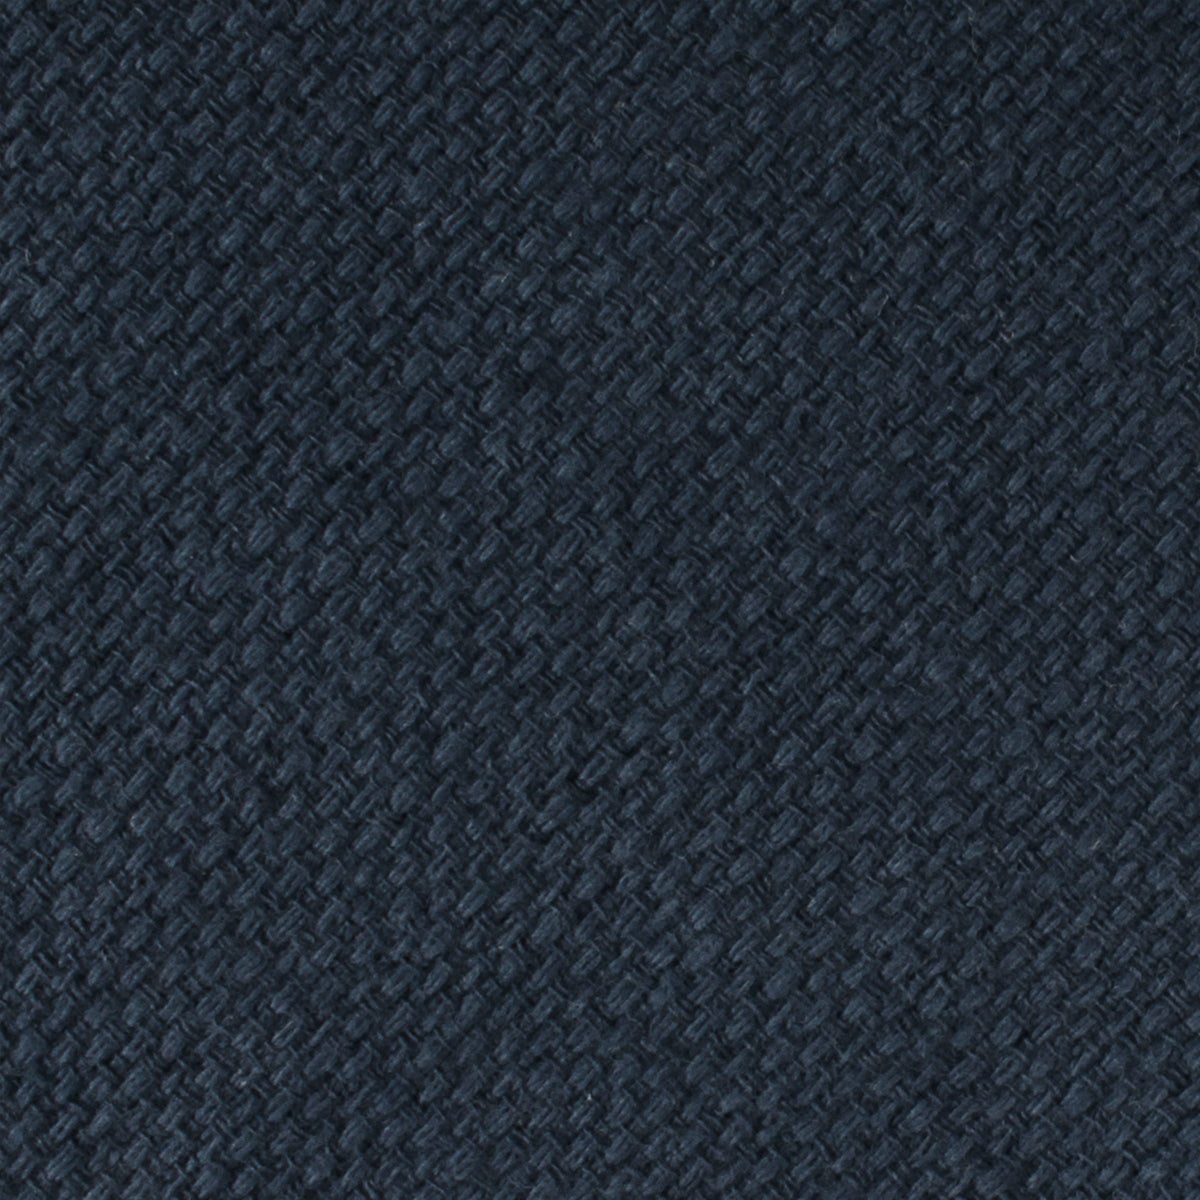 Navy Blue Basket Weave Linen Kids Bow Tie Fabric